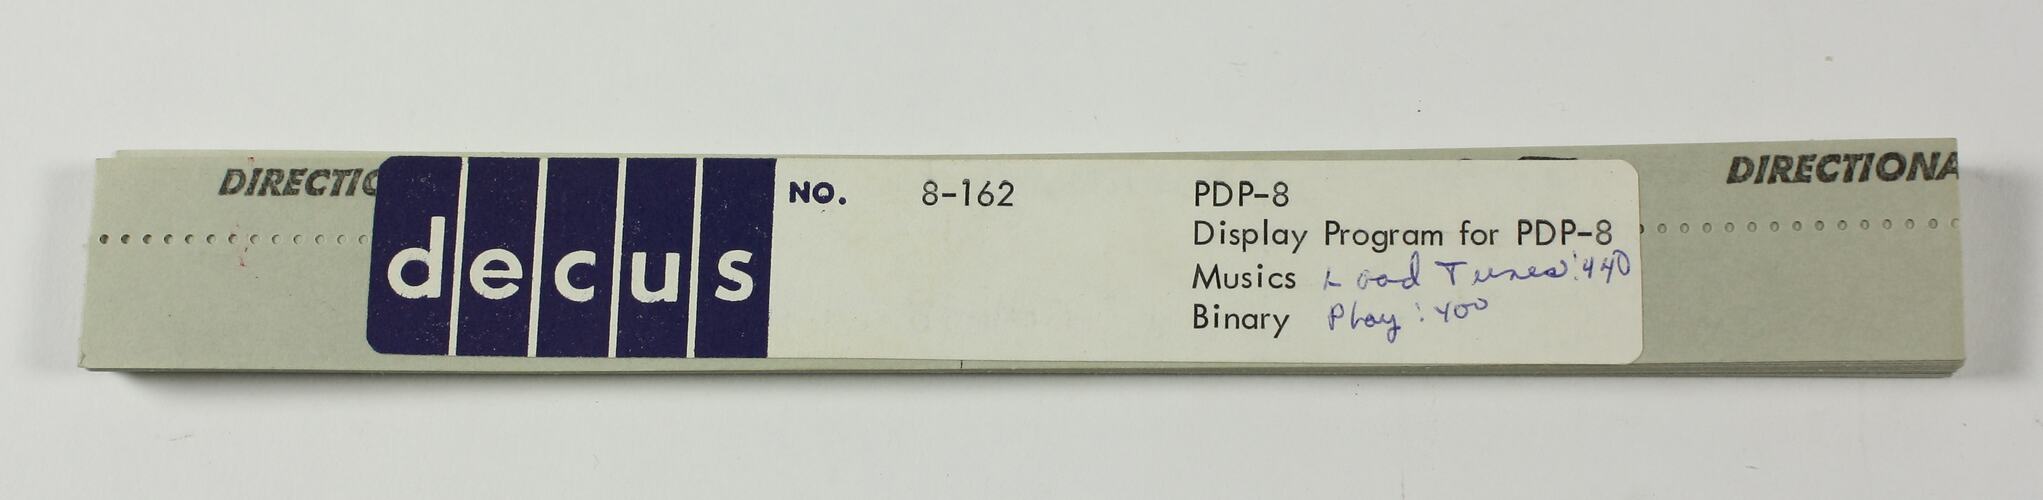 Paper Tape - DECUS, '8-162 PDP-8, Display Program for PDP-8, Musics, Binary'